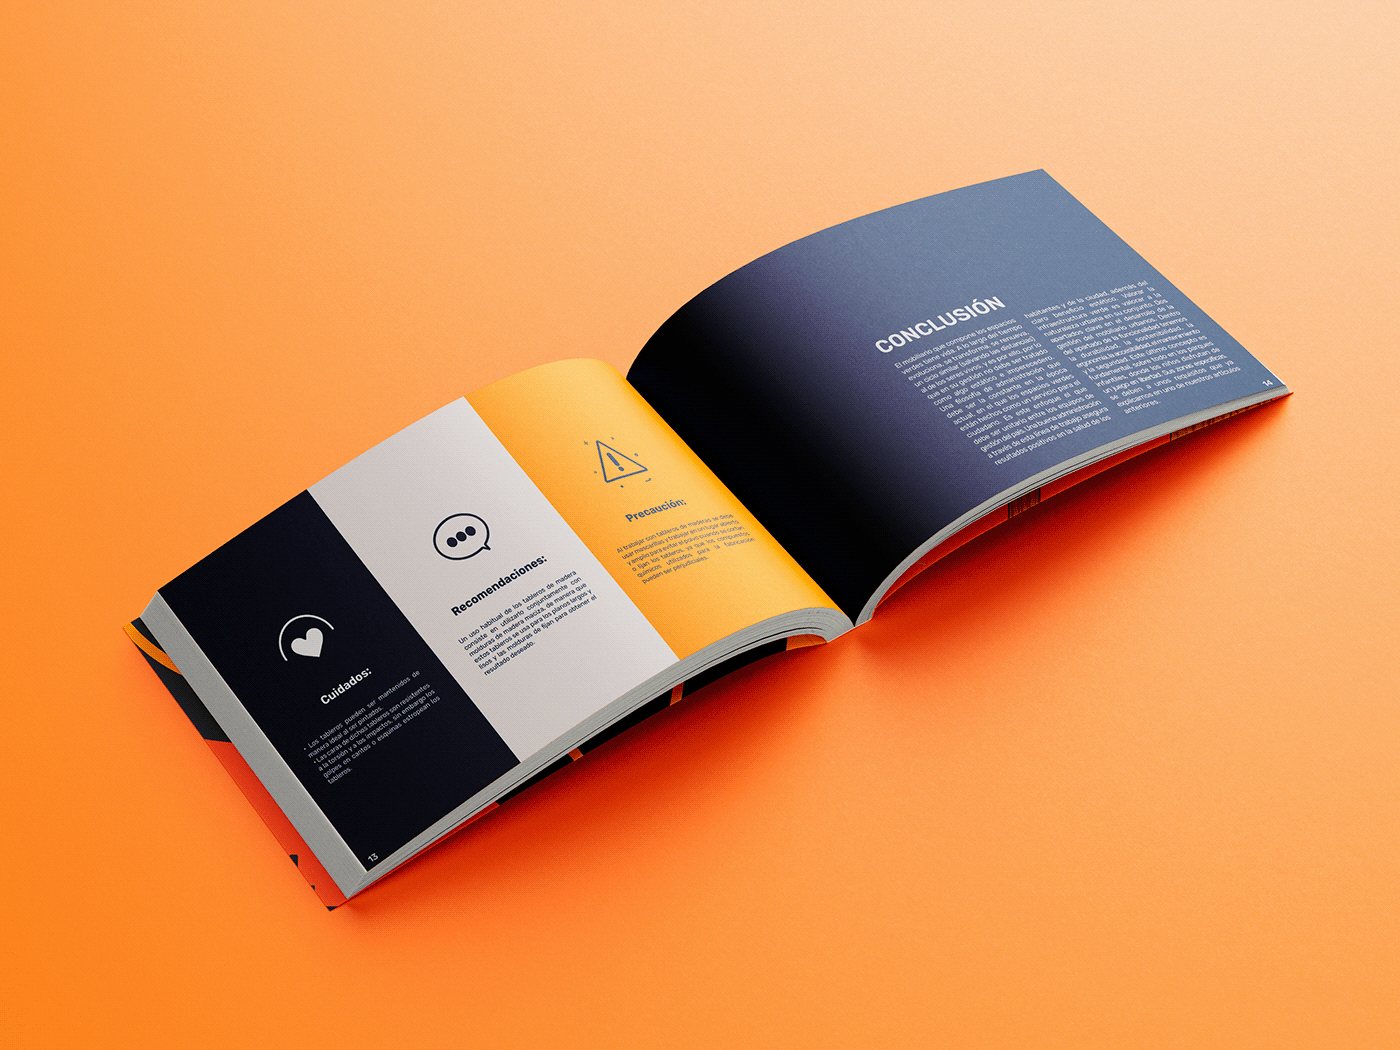 Diseño editorial diagramación manual Instructional Design ilustración digital concept art mobiliario mobility editorial design  typography  